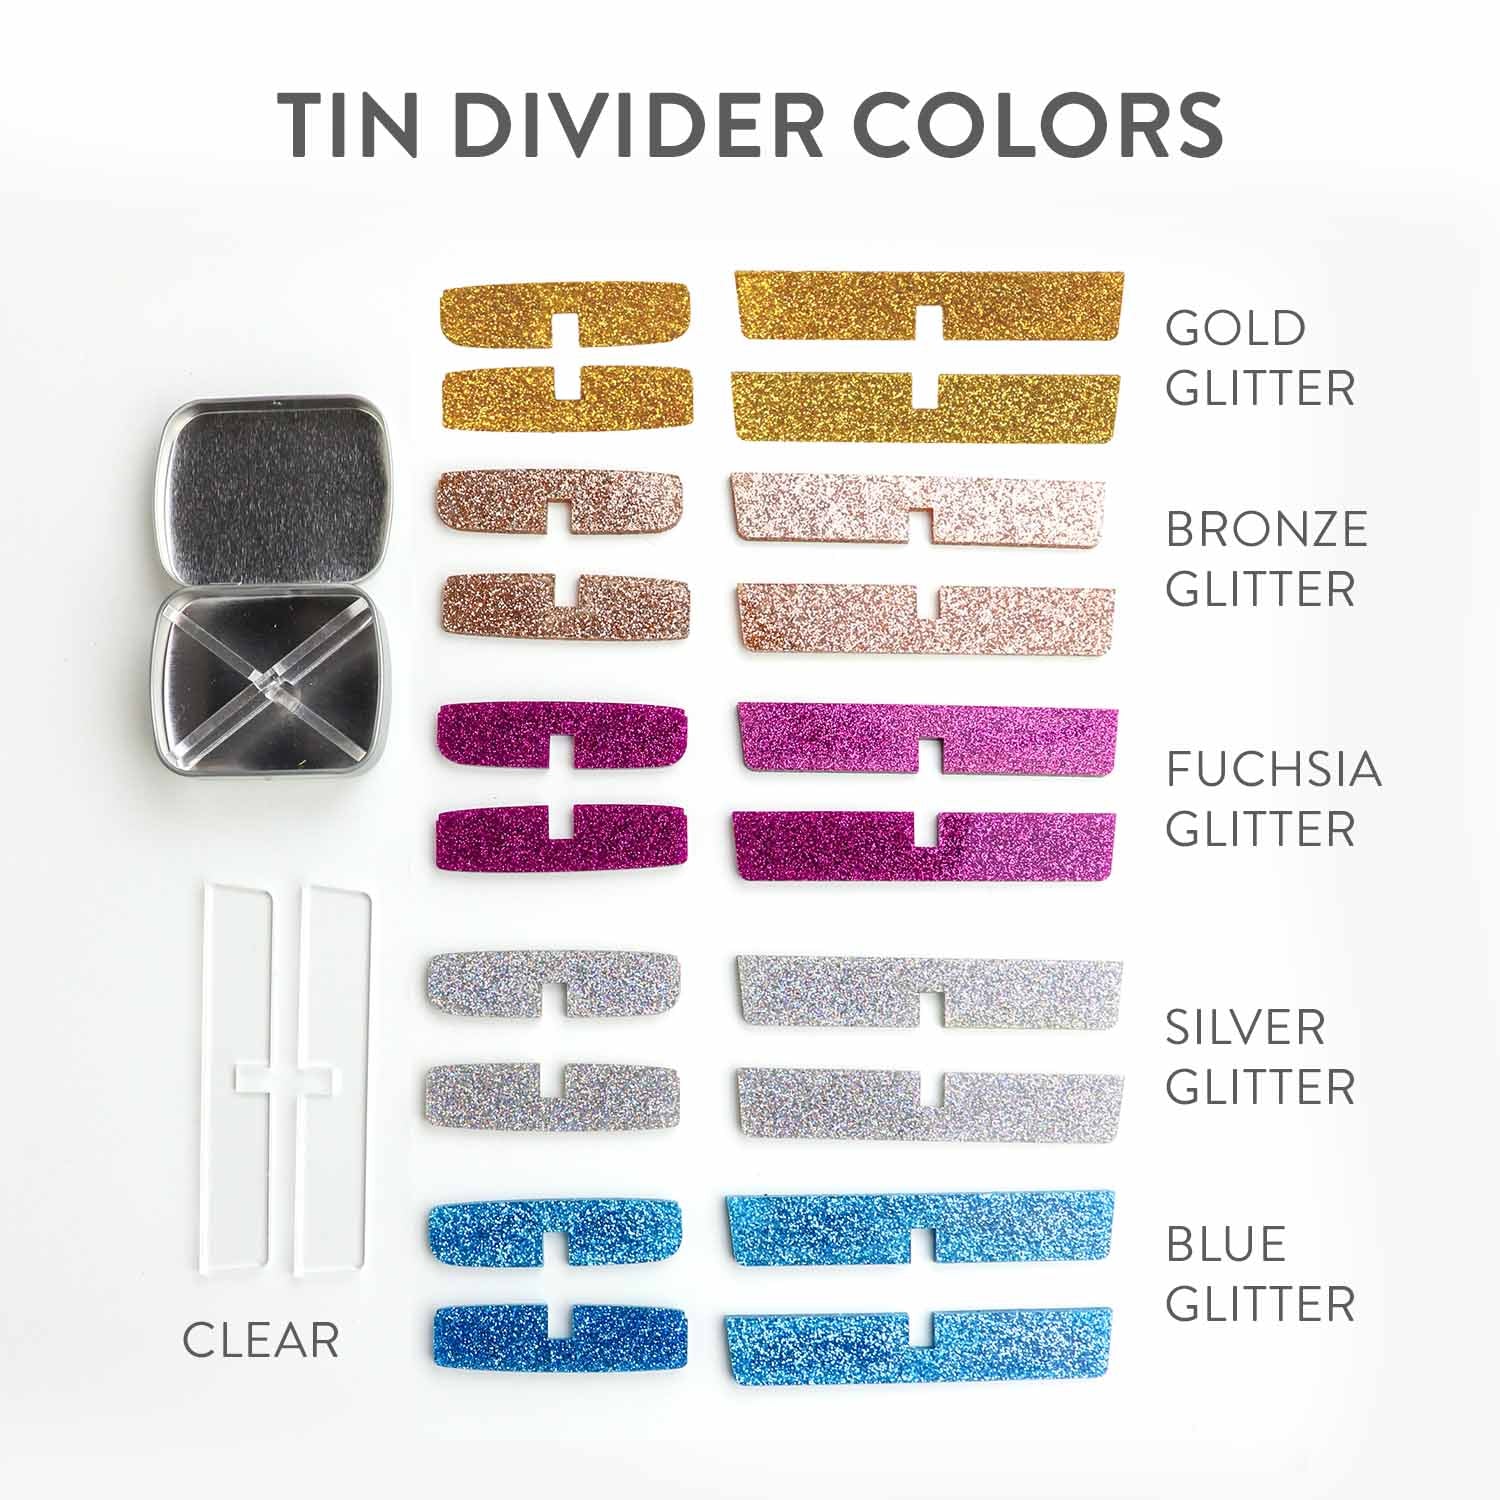 Storage Tin Dividers